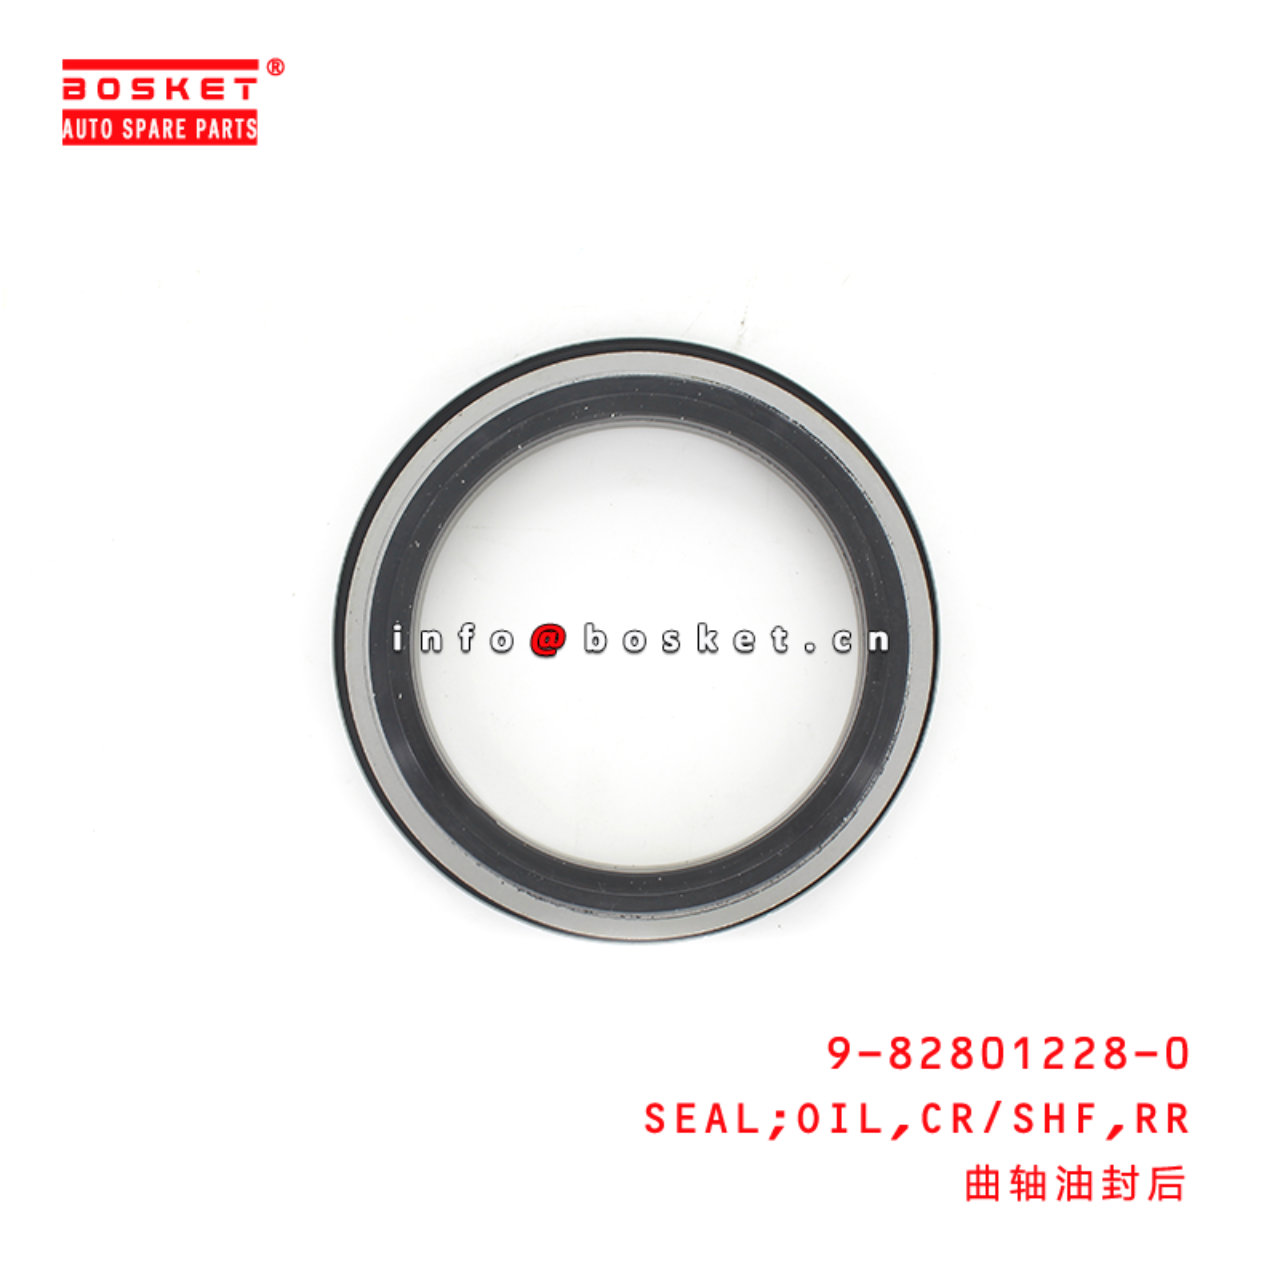 9-82801228-0 Rear Crankshaft Oil Seal Suitable for ISUZU 9828012280